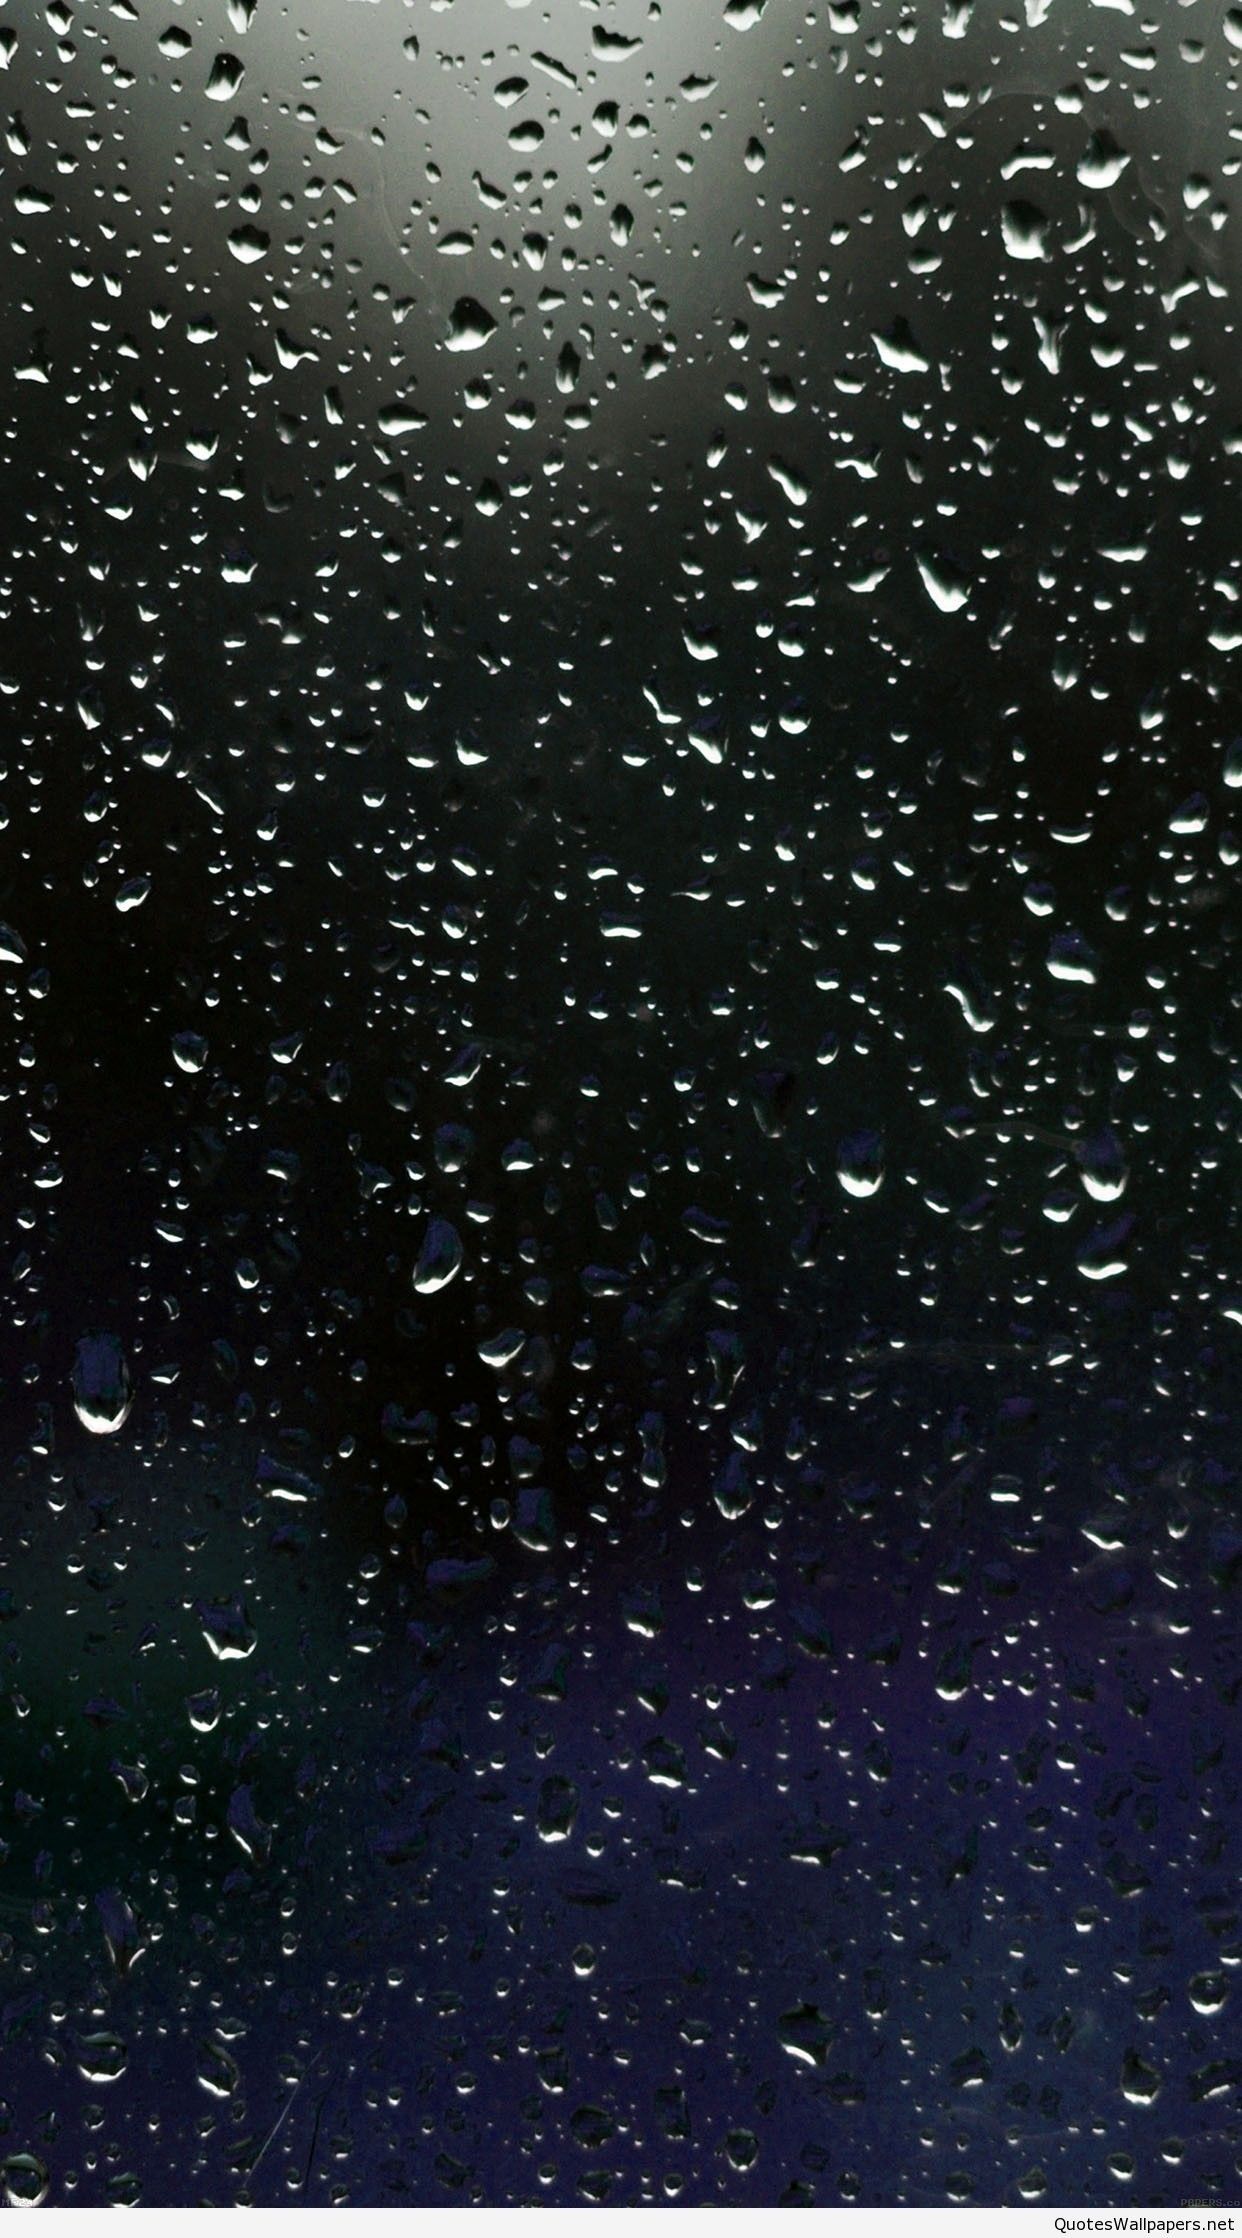 raining windows 10 rain drops nature iphone 6 plus wallpaper